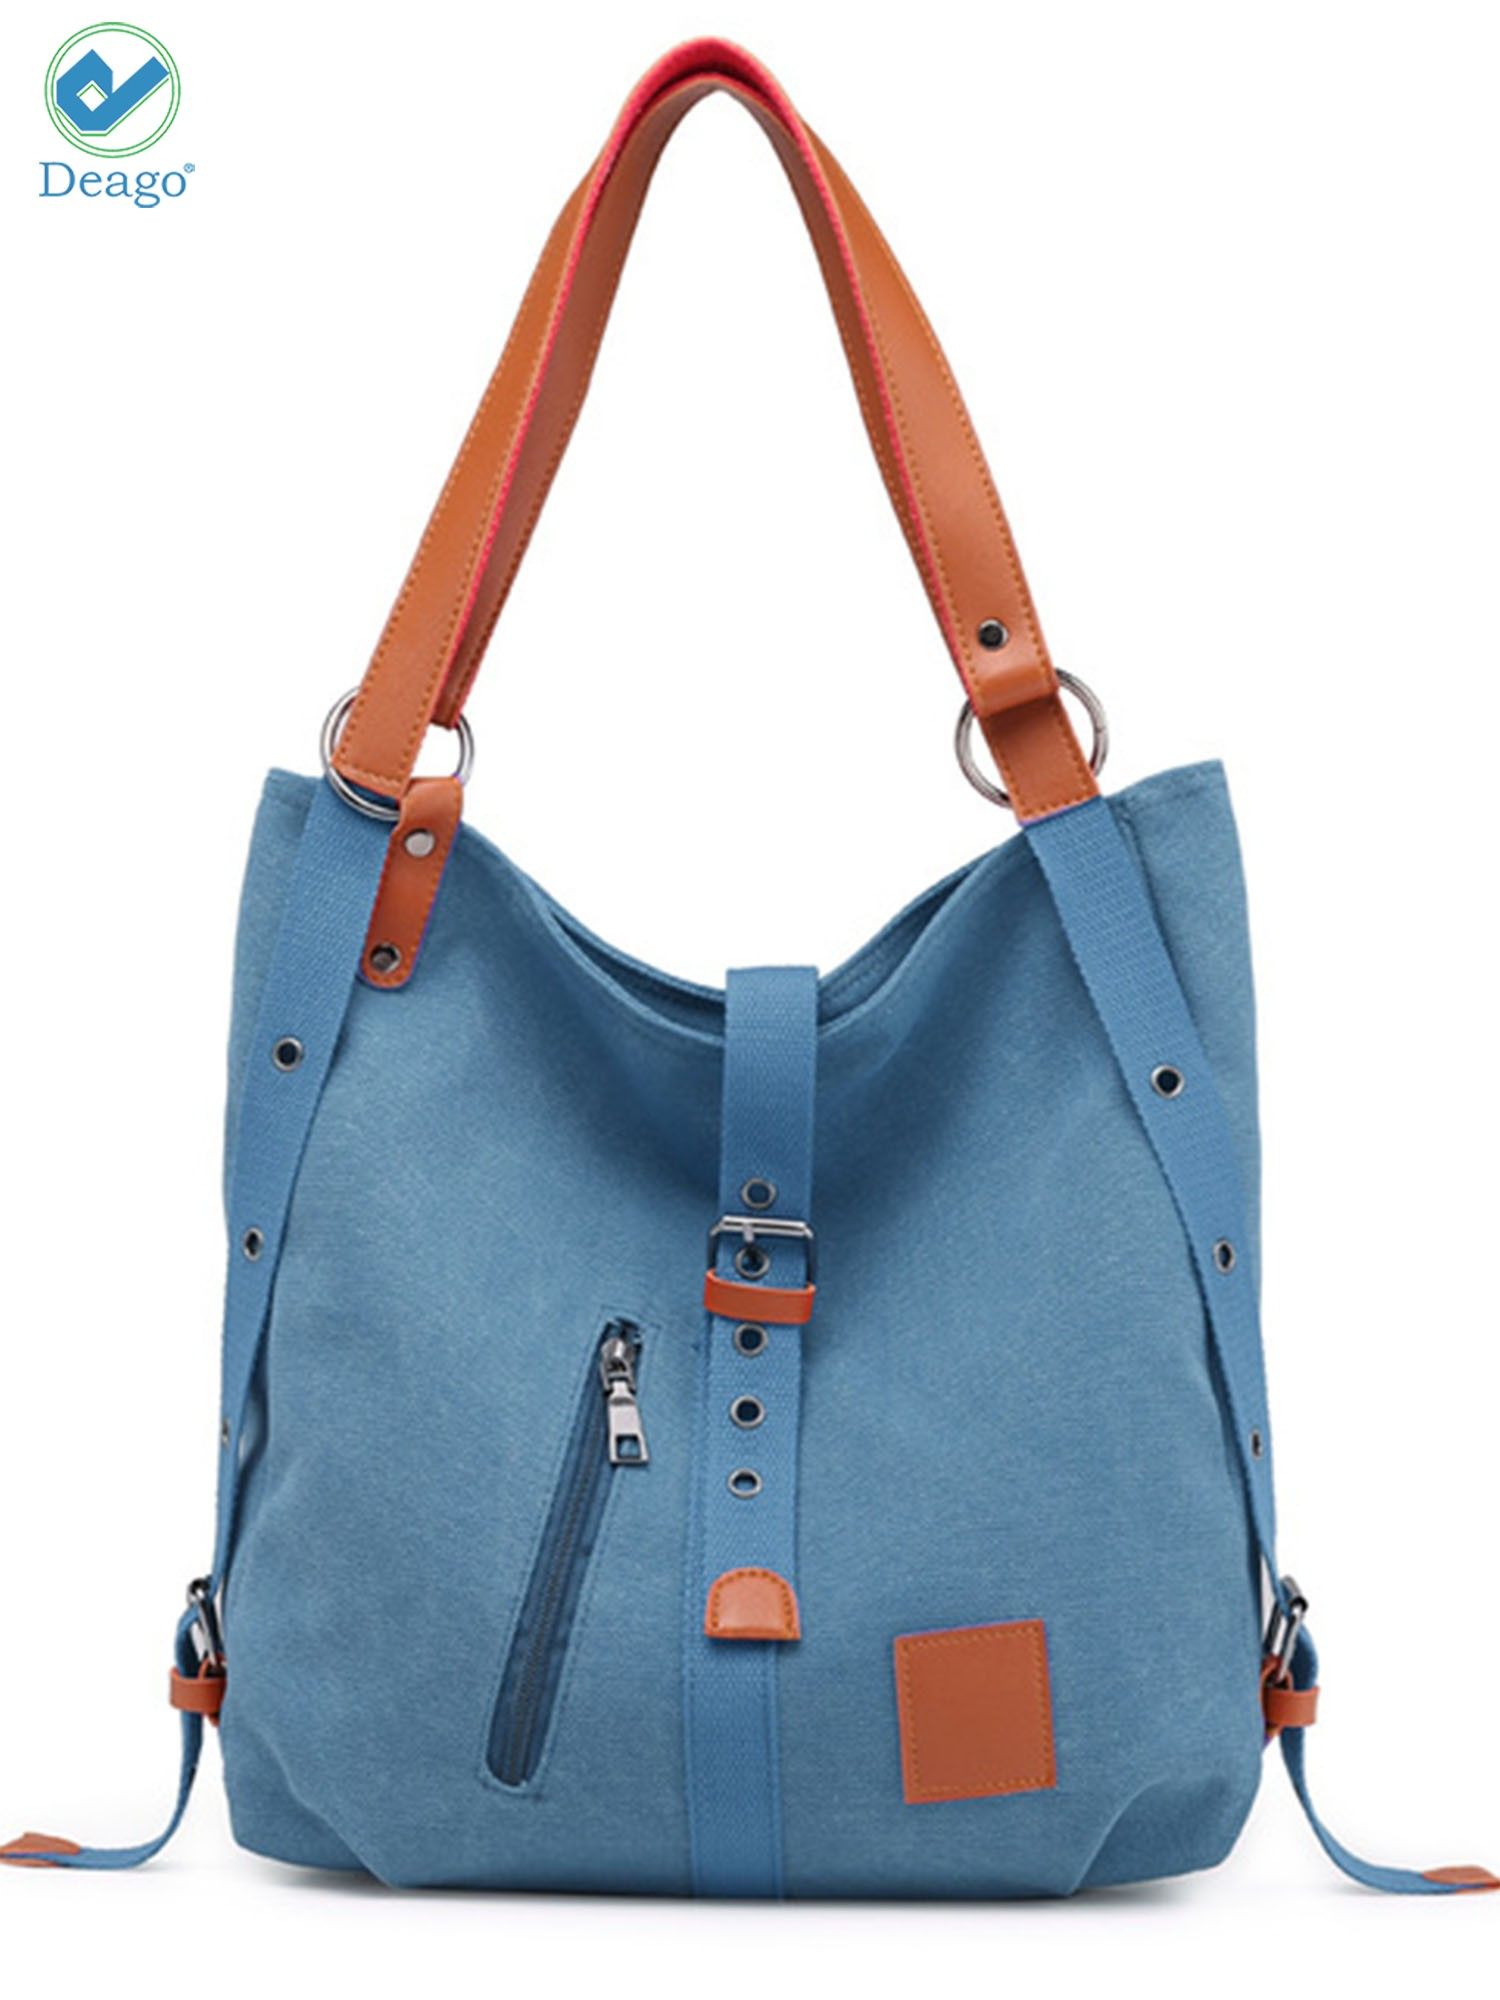 Deago Purse Handbag for Women Canvas Tote Bag Casual Shoulder Bag School Bag Rucksack Convertible Backpack (Blue) - image 1 of 10